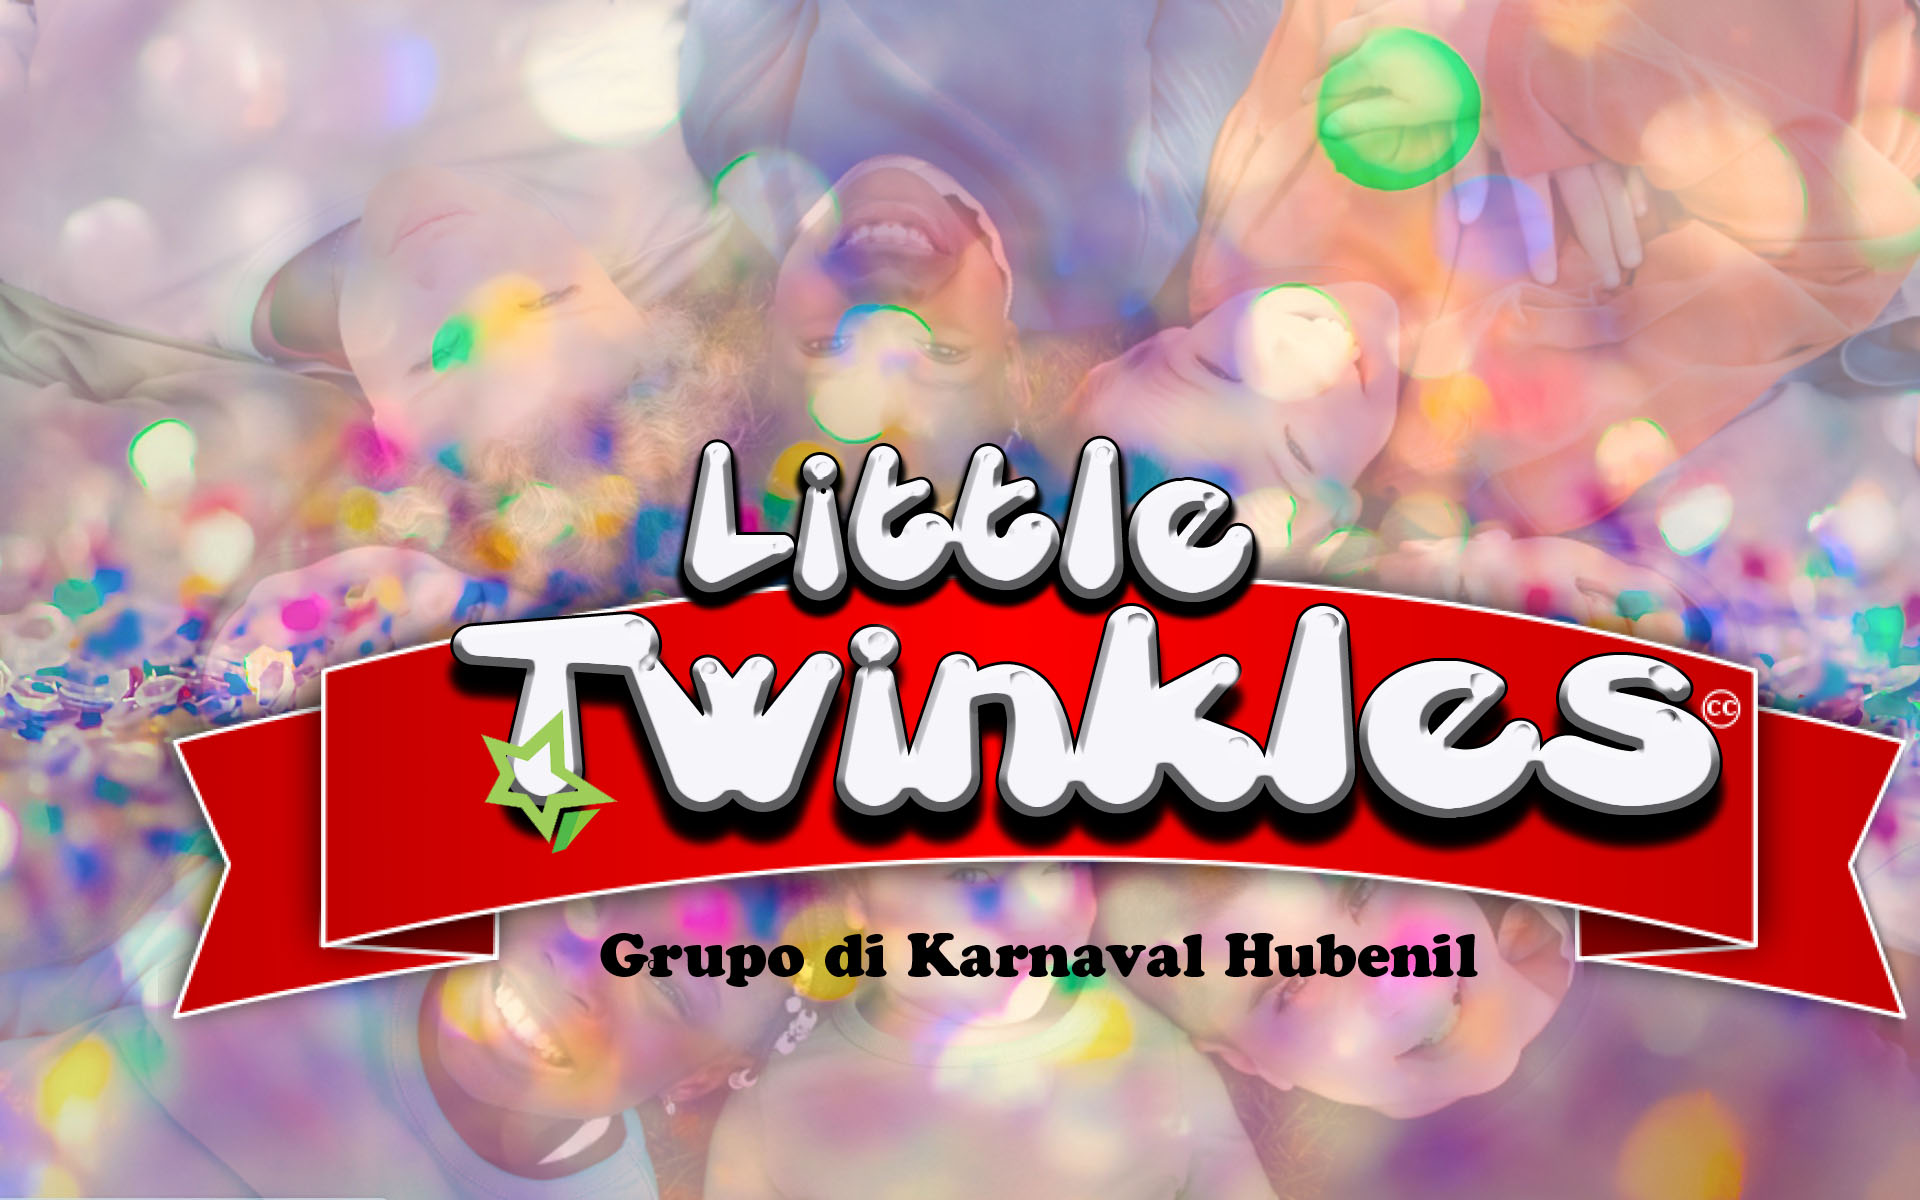 Sera konosi ku e grupo di Karnaval hubenil nobo “Little Twinkles”